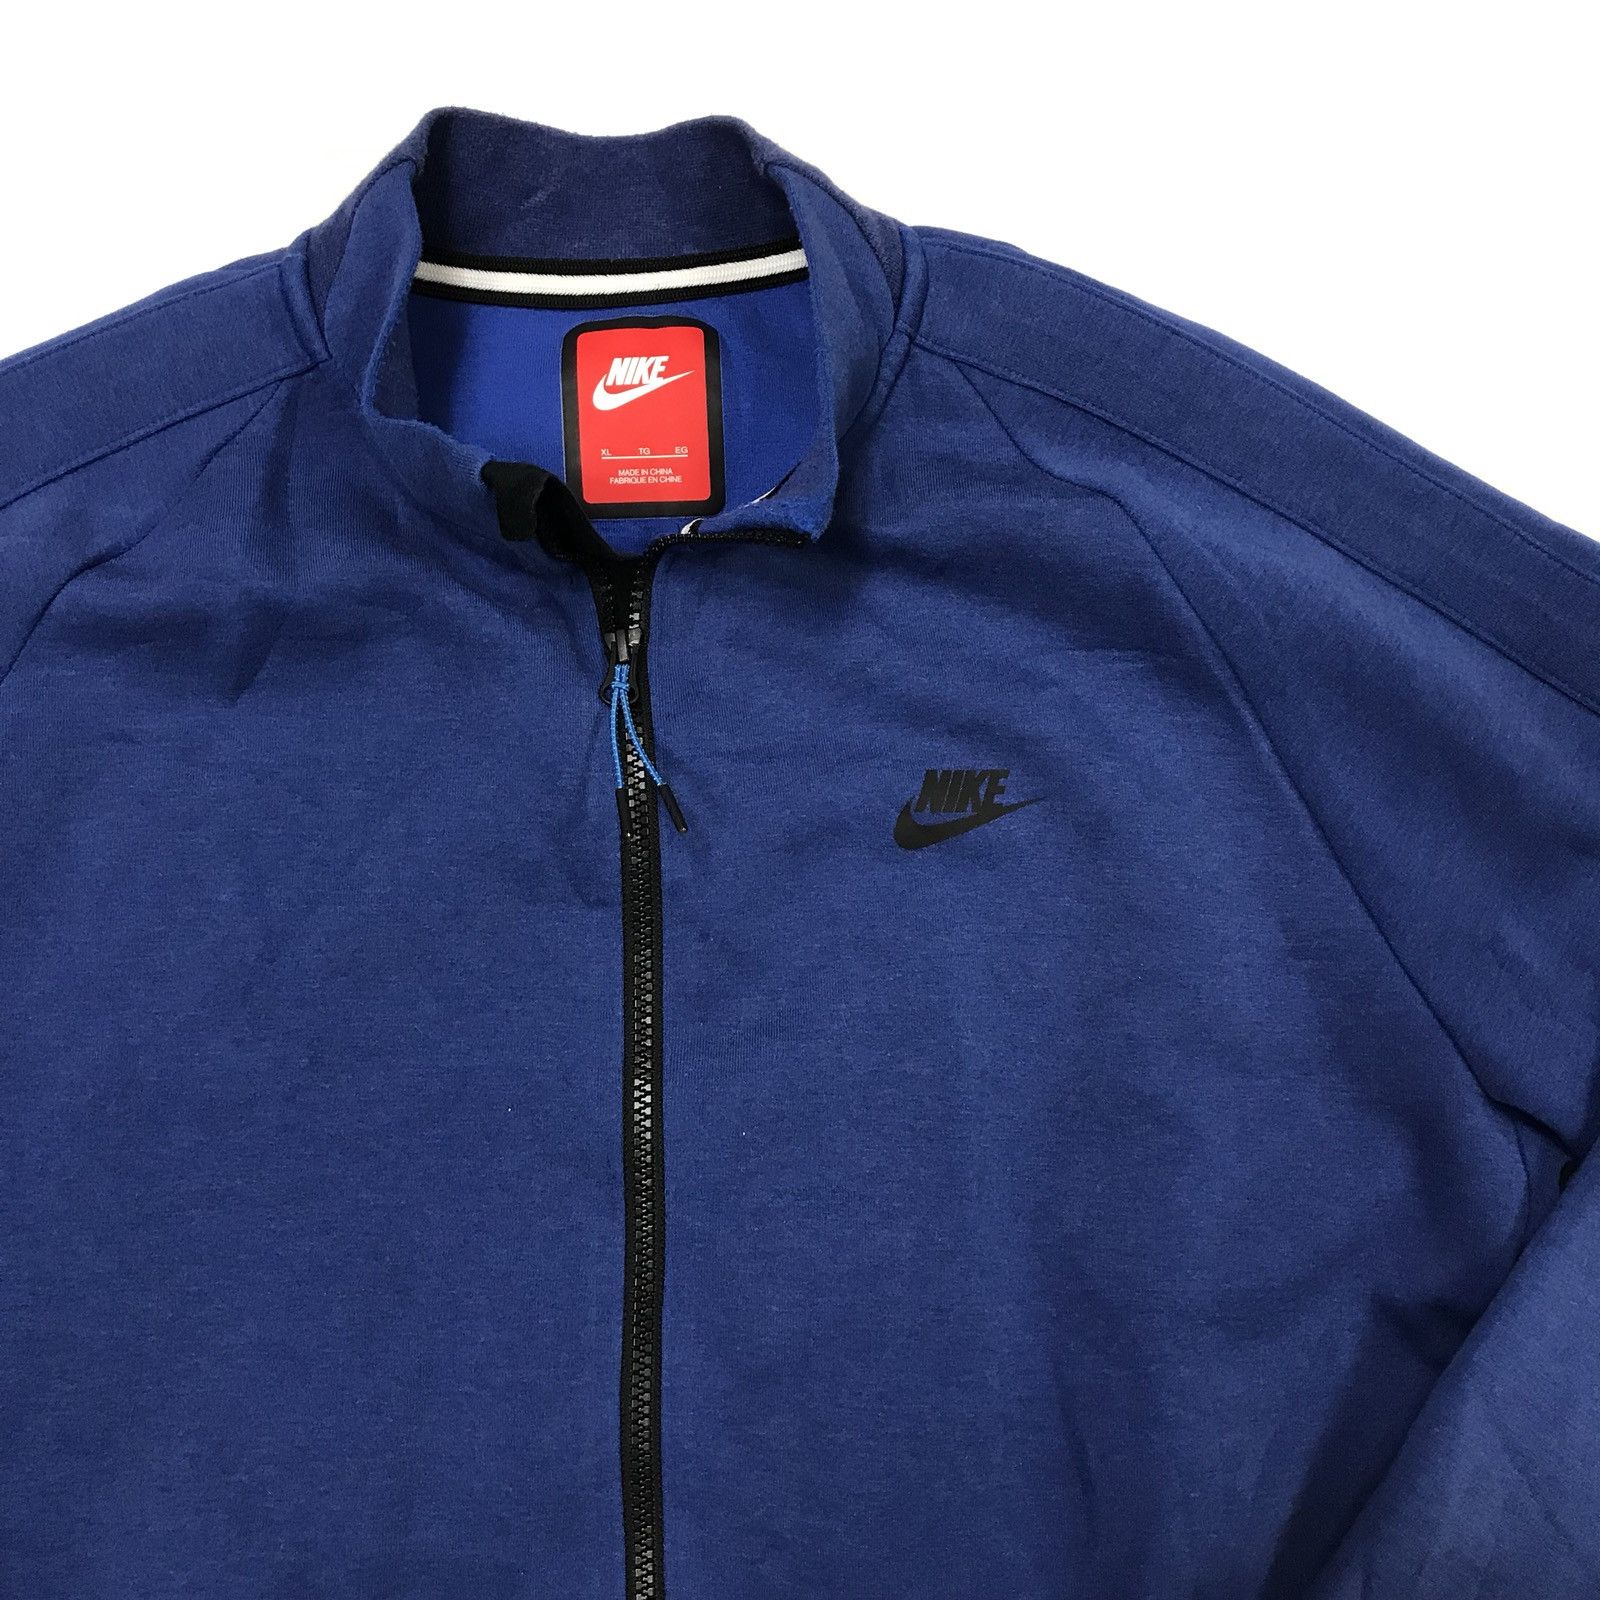 Nike Nike Tech Fleece Sweatshirt Full Zip Blue Black Acg Vtg 90s Size US L / EU 52-54 / 3 - 2 Preview